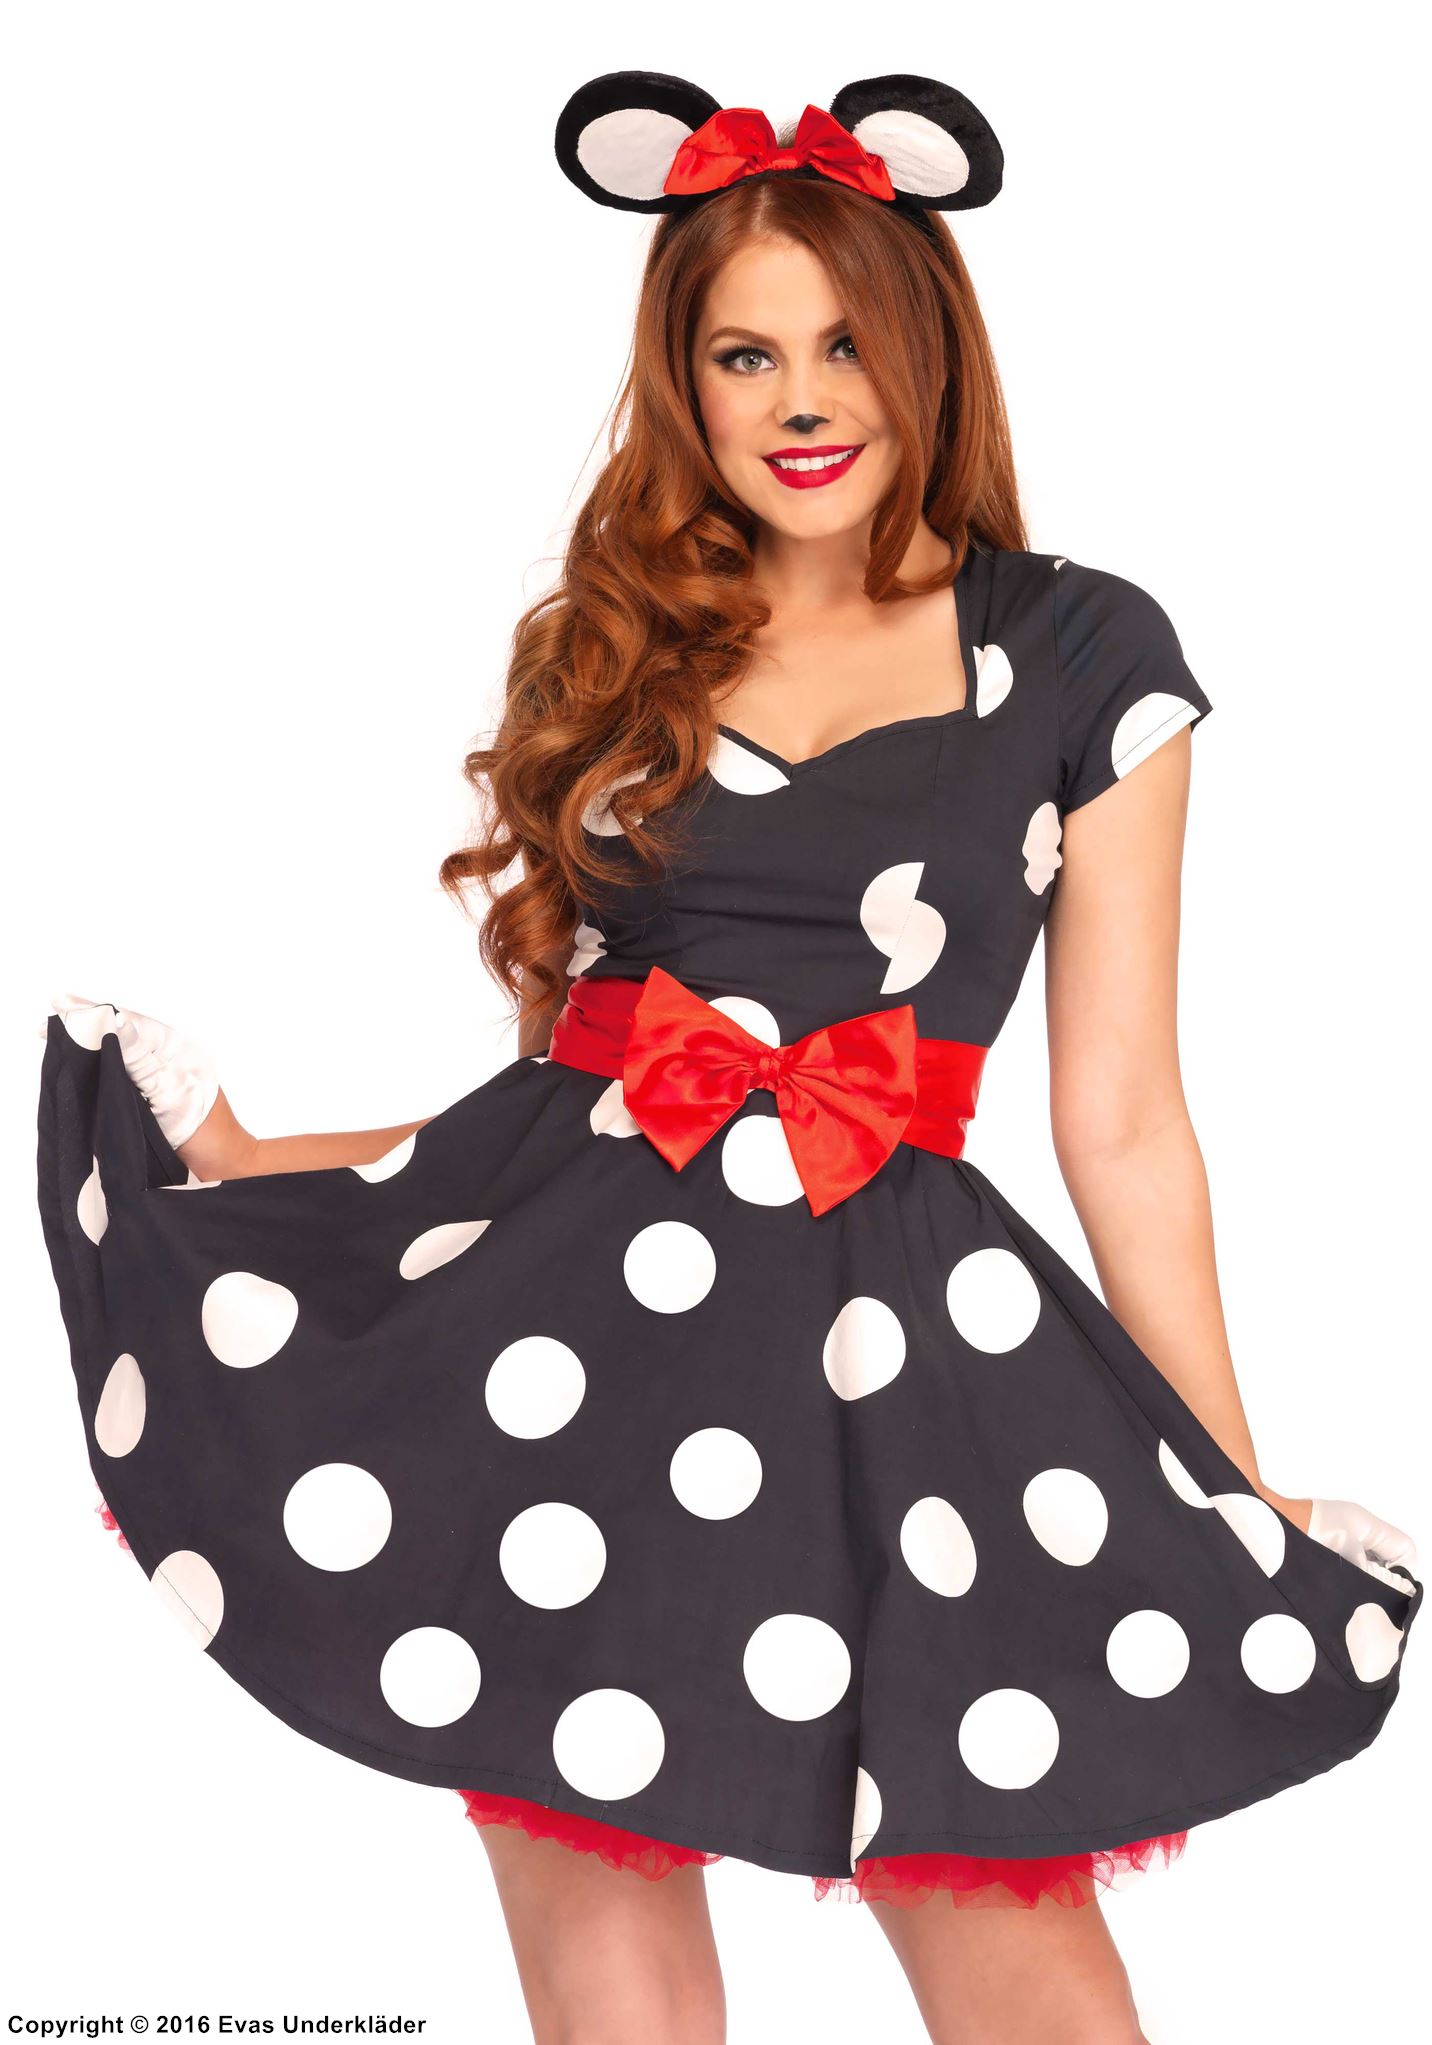 Minnie Mouse, costume dress, big bow, short sleeves, polka dot